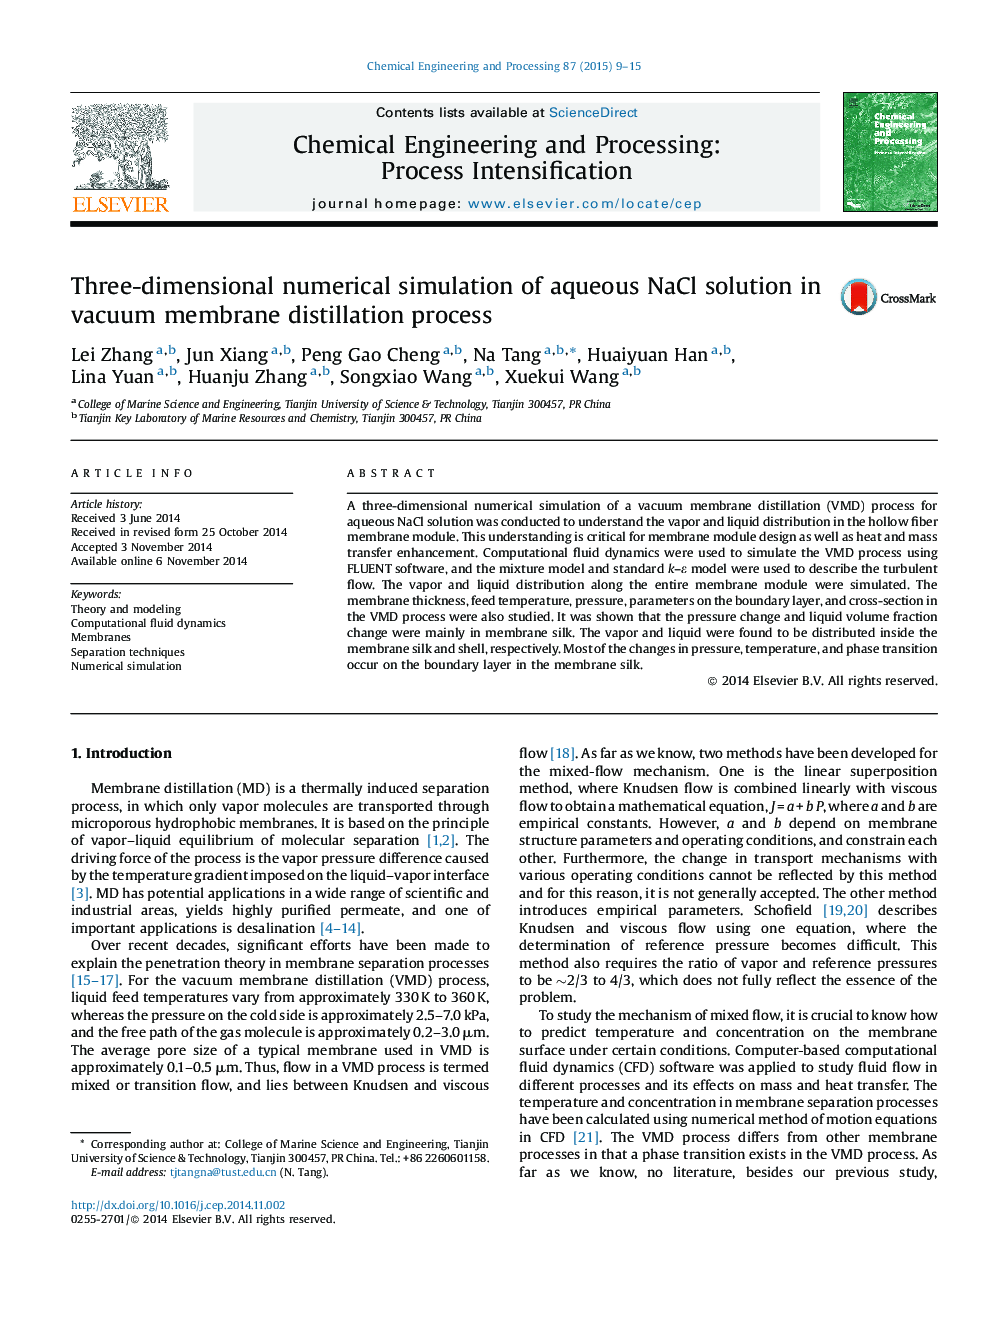 Three-dimensional numerical simulation of aqueous NaCl solution in vacuum membrane distillation process